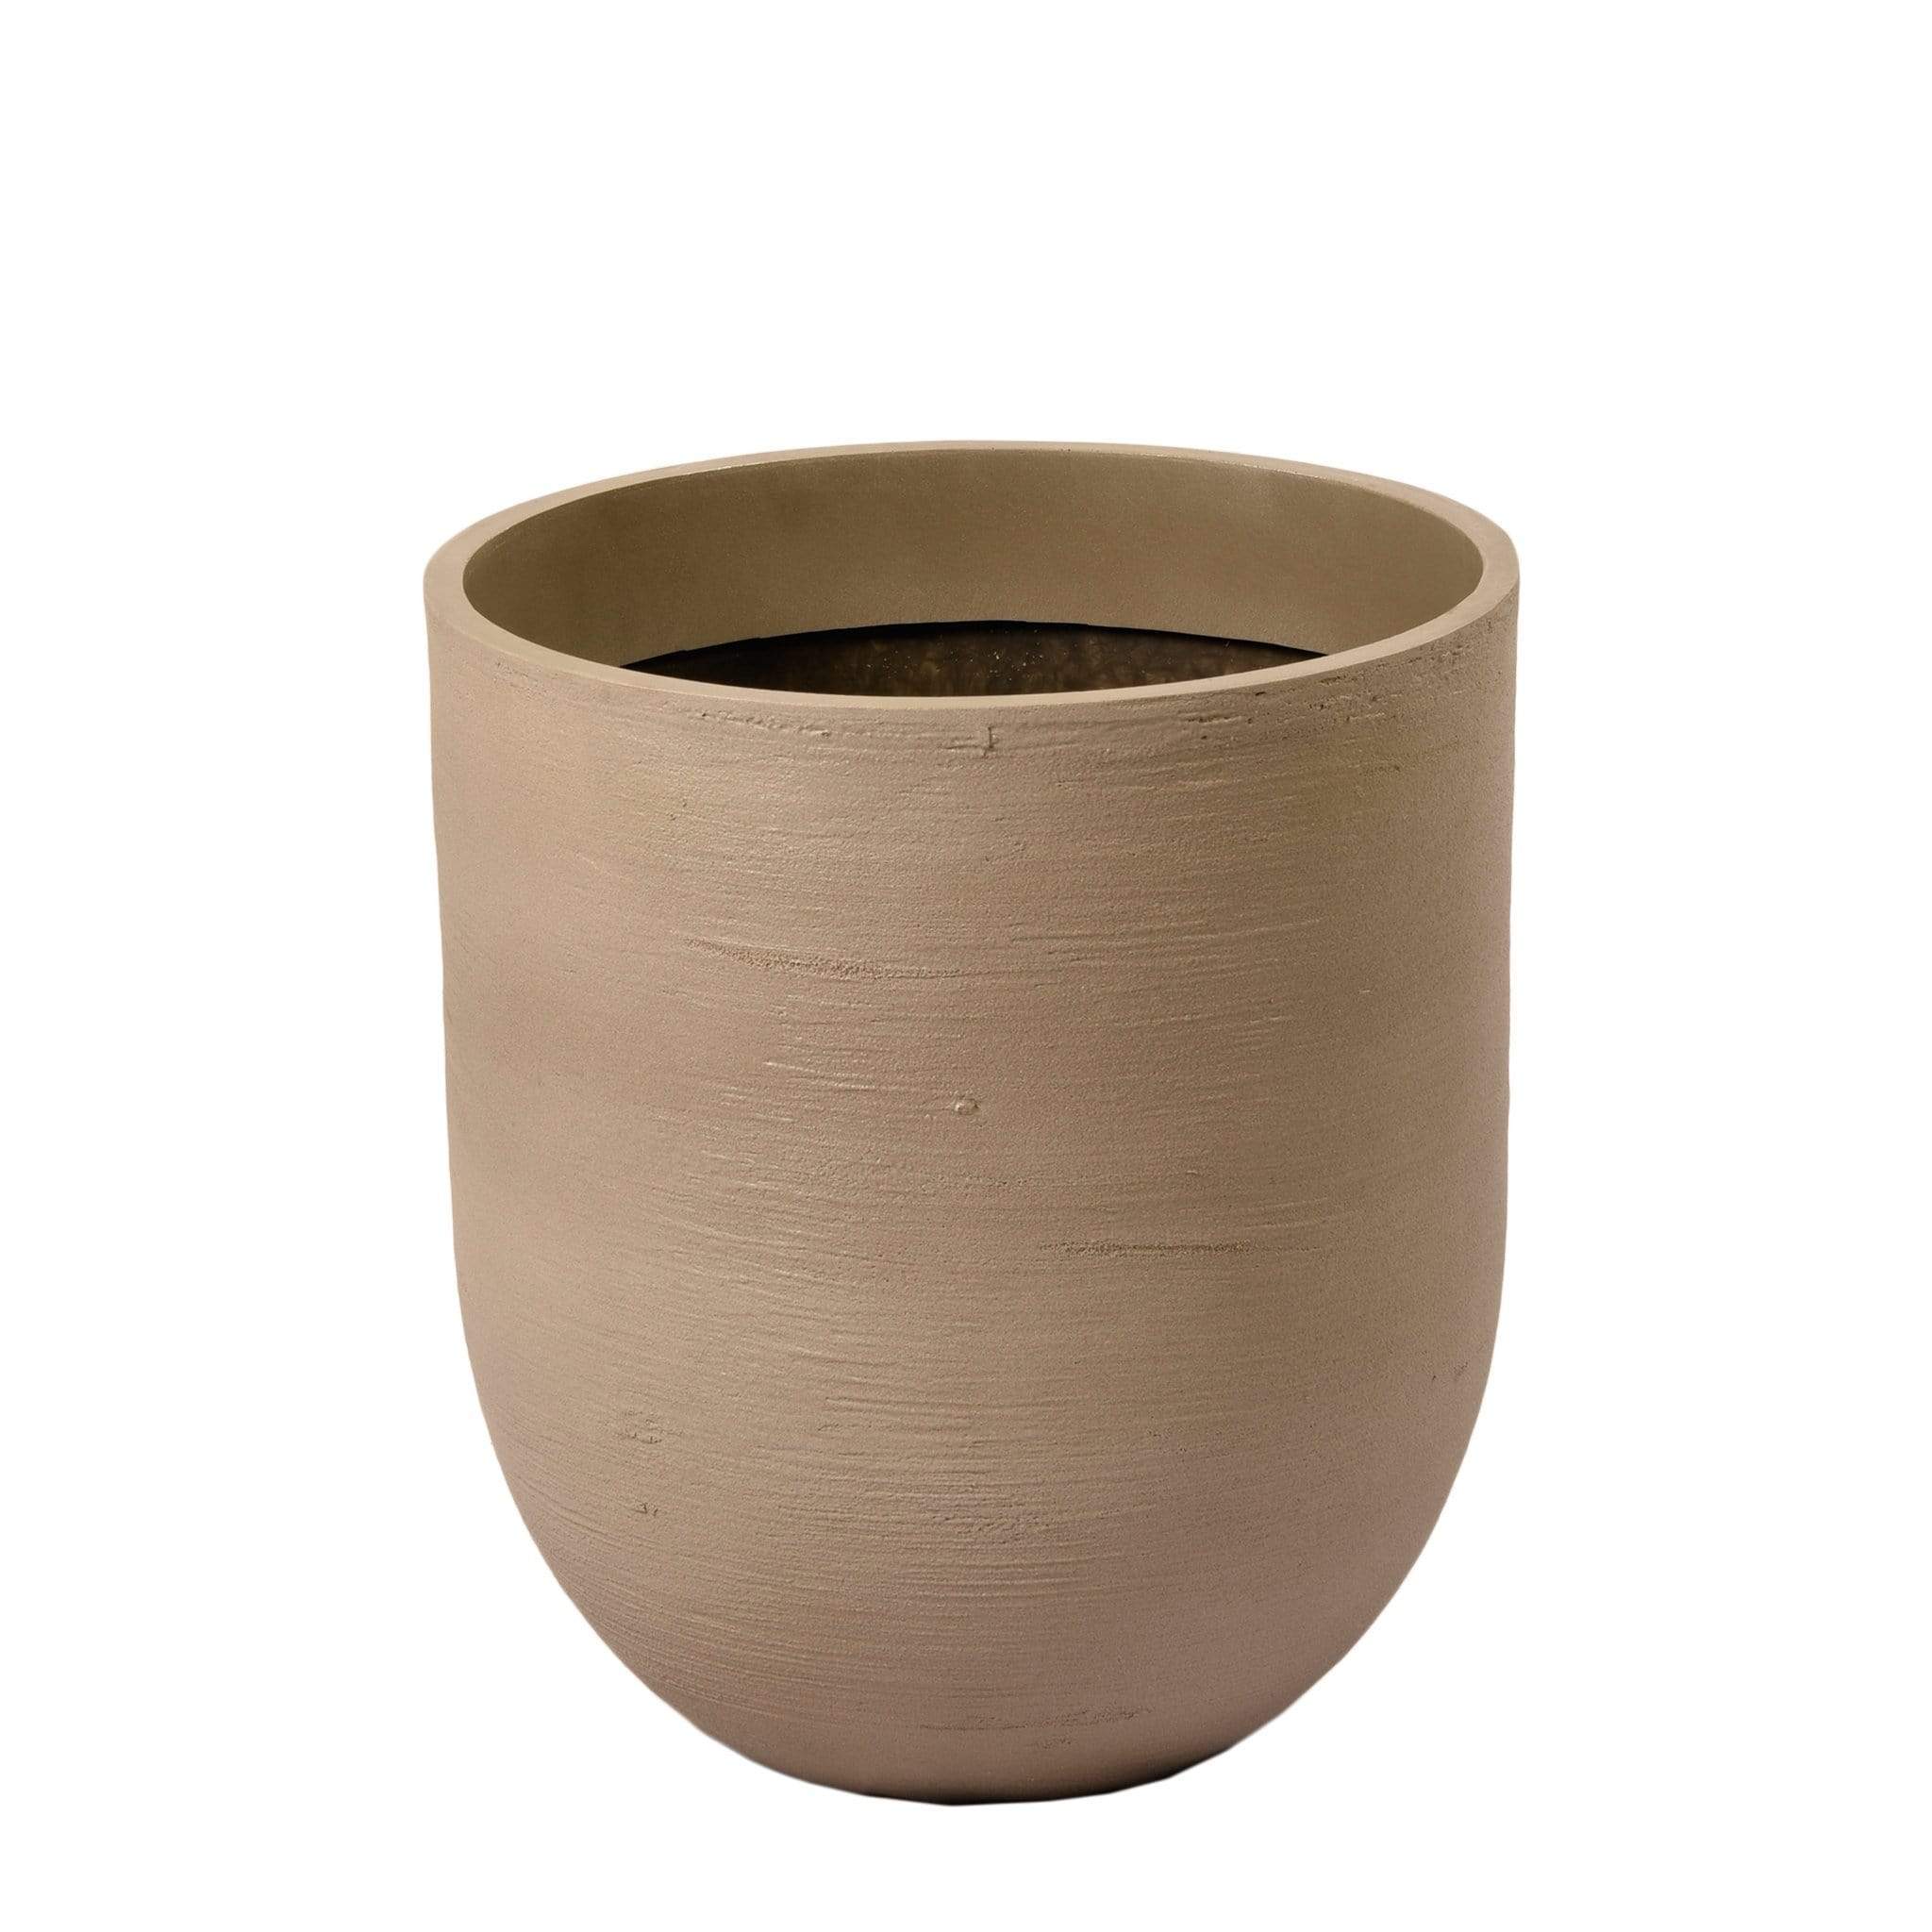 Medium Round Sandfiber Tree Pot - Bloomr